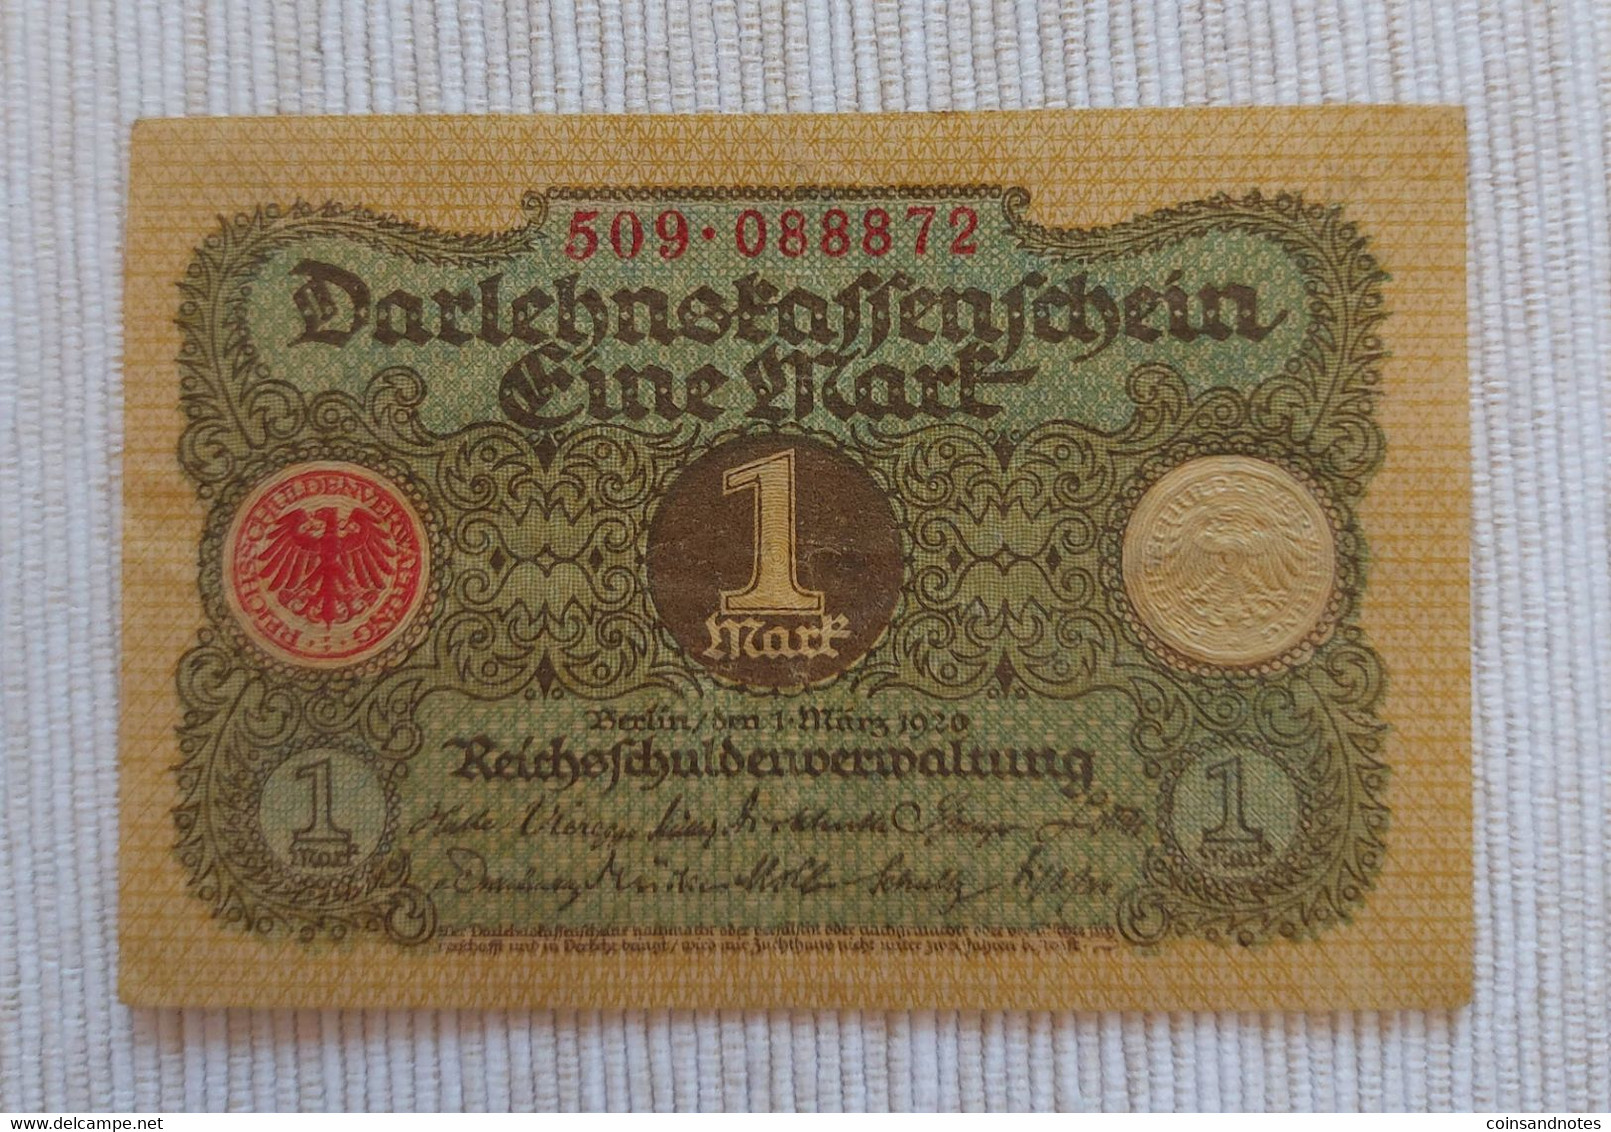 Germany 1920 - 1 Mark - Darlehenskassenschein - Rosenberg 64 - Nr 509.088872 - VVF - 1 Mark